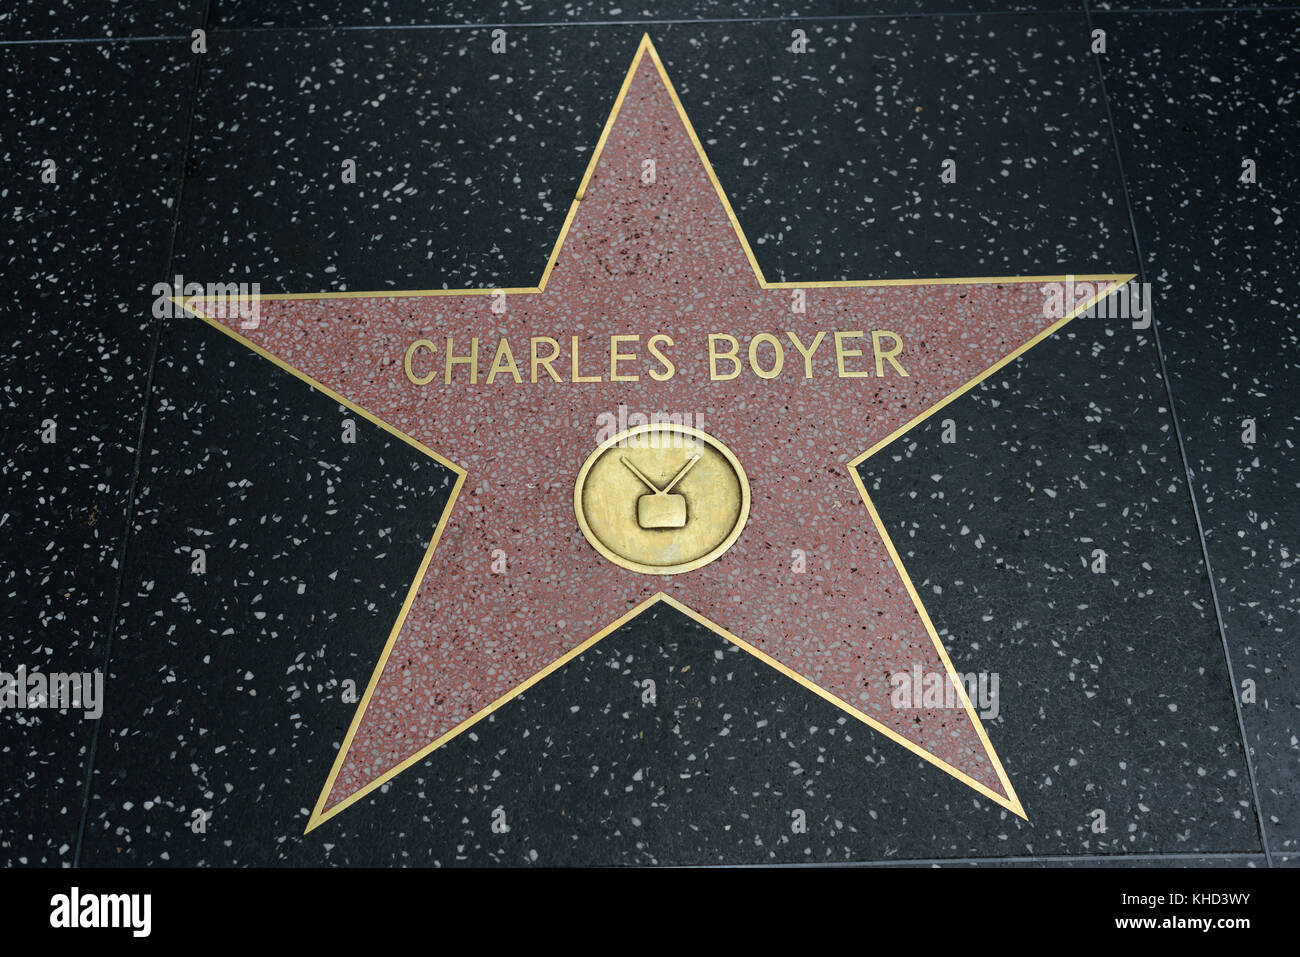 HOLLYWOOD, CA - DICEMBRE 06: Charles Boyer stella sulla Hollywood Walk of Fame a Hollywood, California il 6 dicembre 2016. Foto Stock